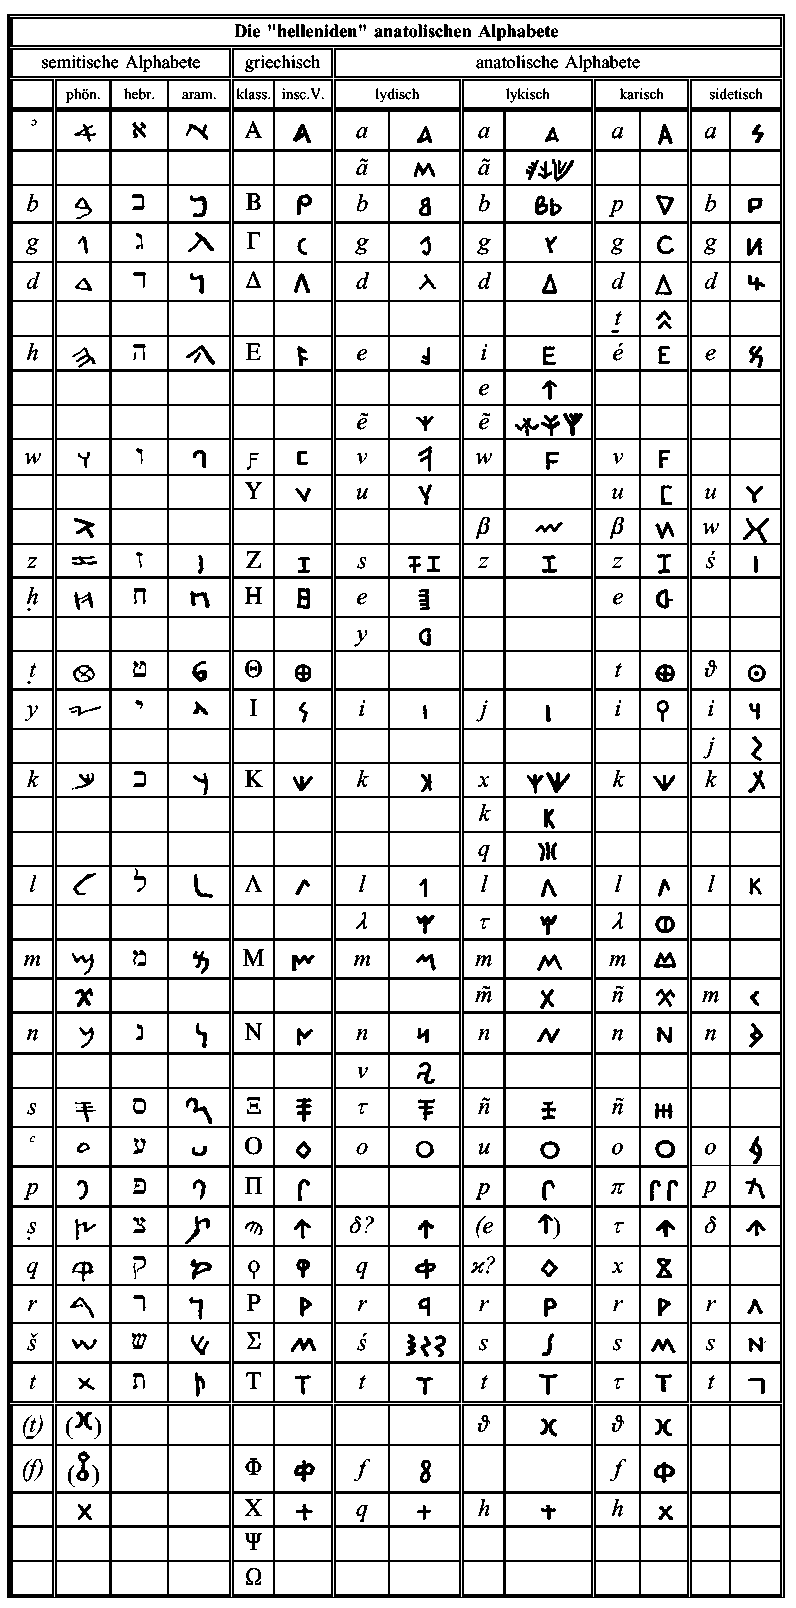 Hellenoid alphabets of Anatolia